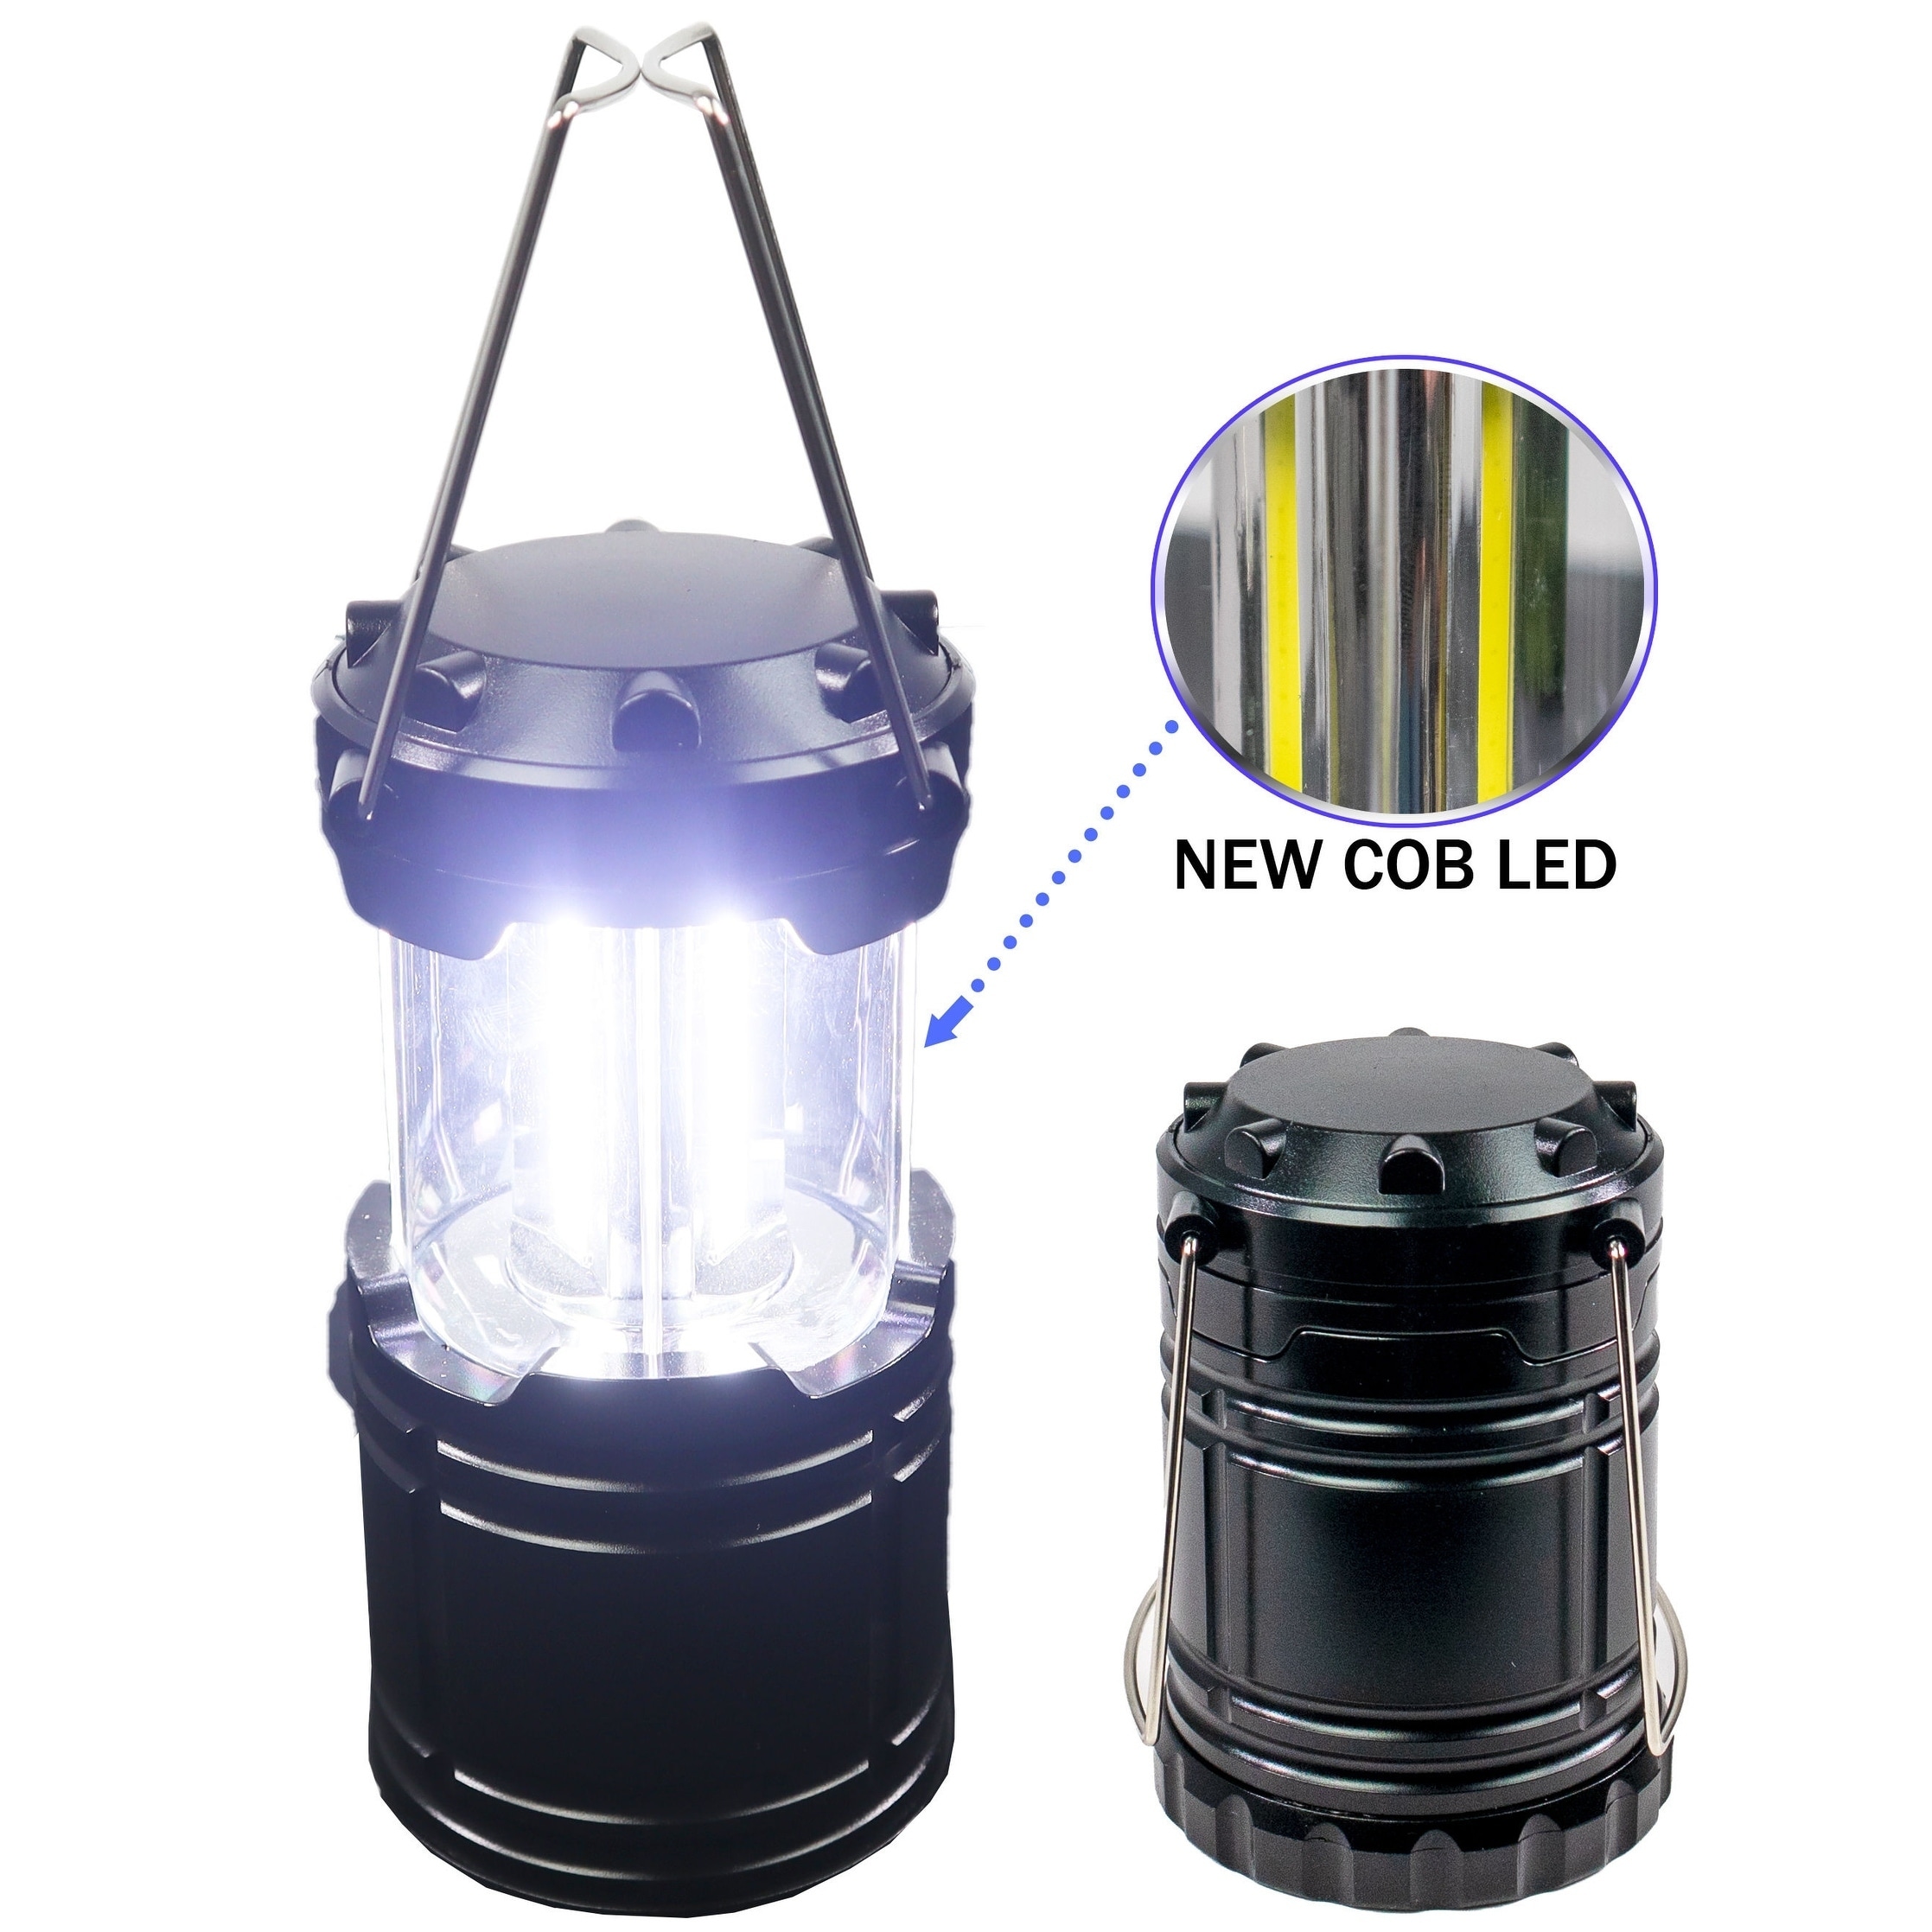 https://ak1.ostkcdn.com/images/products/30085113/Portable-Collapsible-Lantern-Military-Tough-Light-LED-COB-Tactical-Lantern-Ultra-Bright-Portable-NEW-d4b1094b-a55b-4106-b4f9-87c9dd70ecd8.jpg